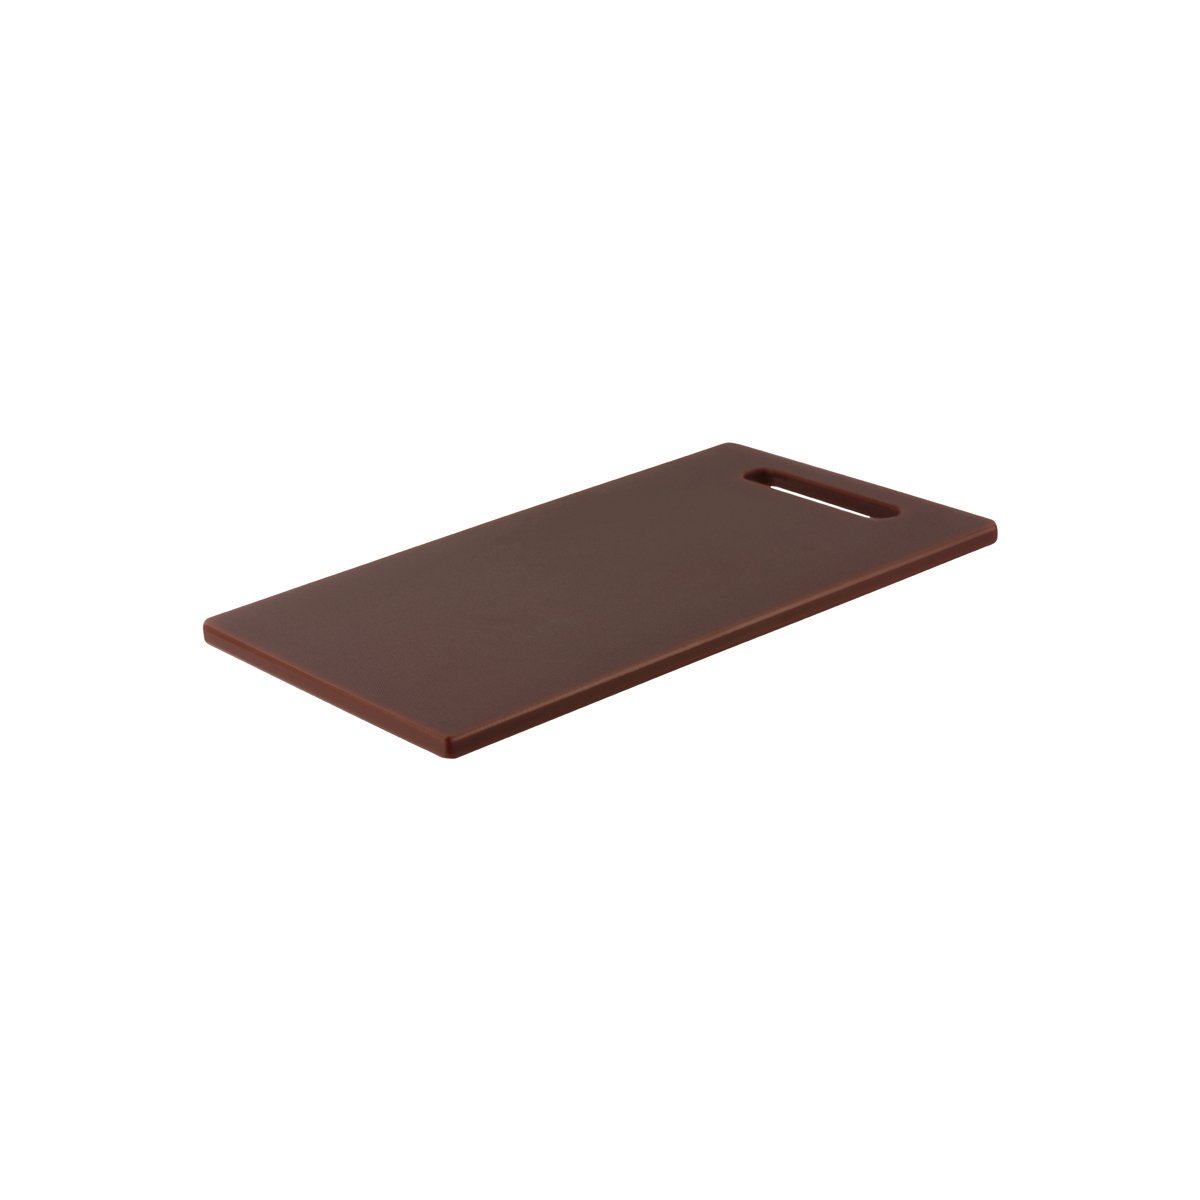 04346 Chef Inox Cutting Board Polyethylene Brown with Handle 300x450x12mm Tomkin Australia Hospitality Supplies